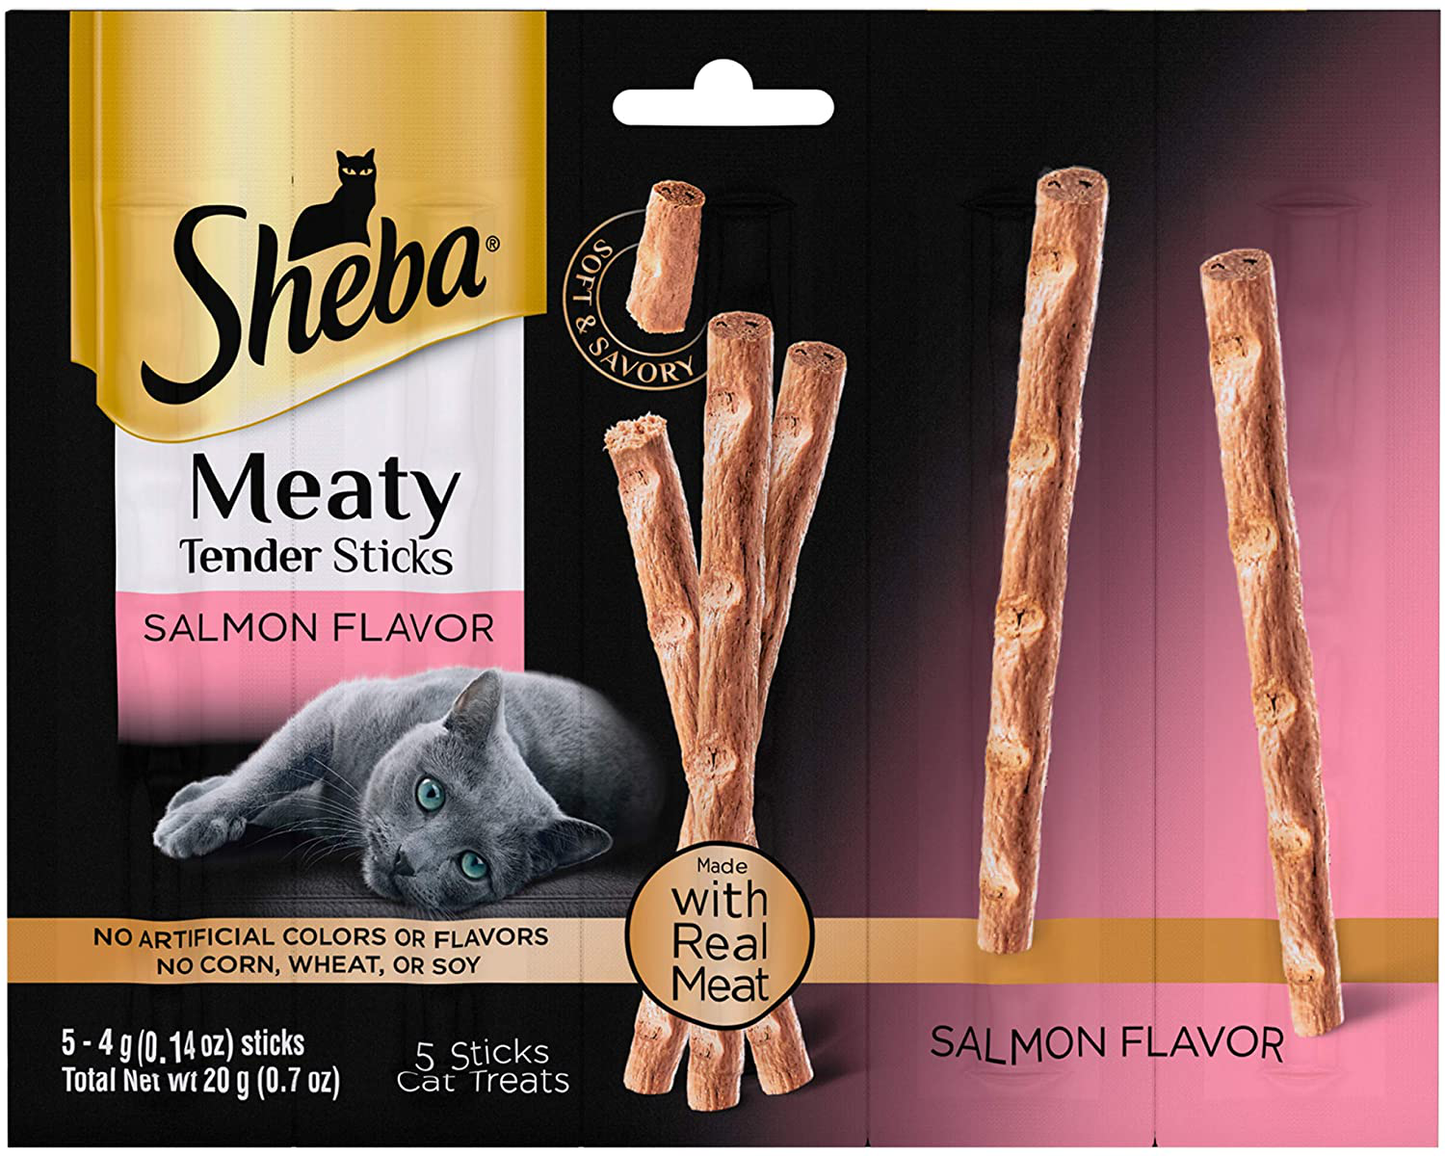 Sheba Meaty Tender Sticks Cat Treats, Pack of 10